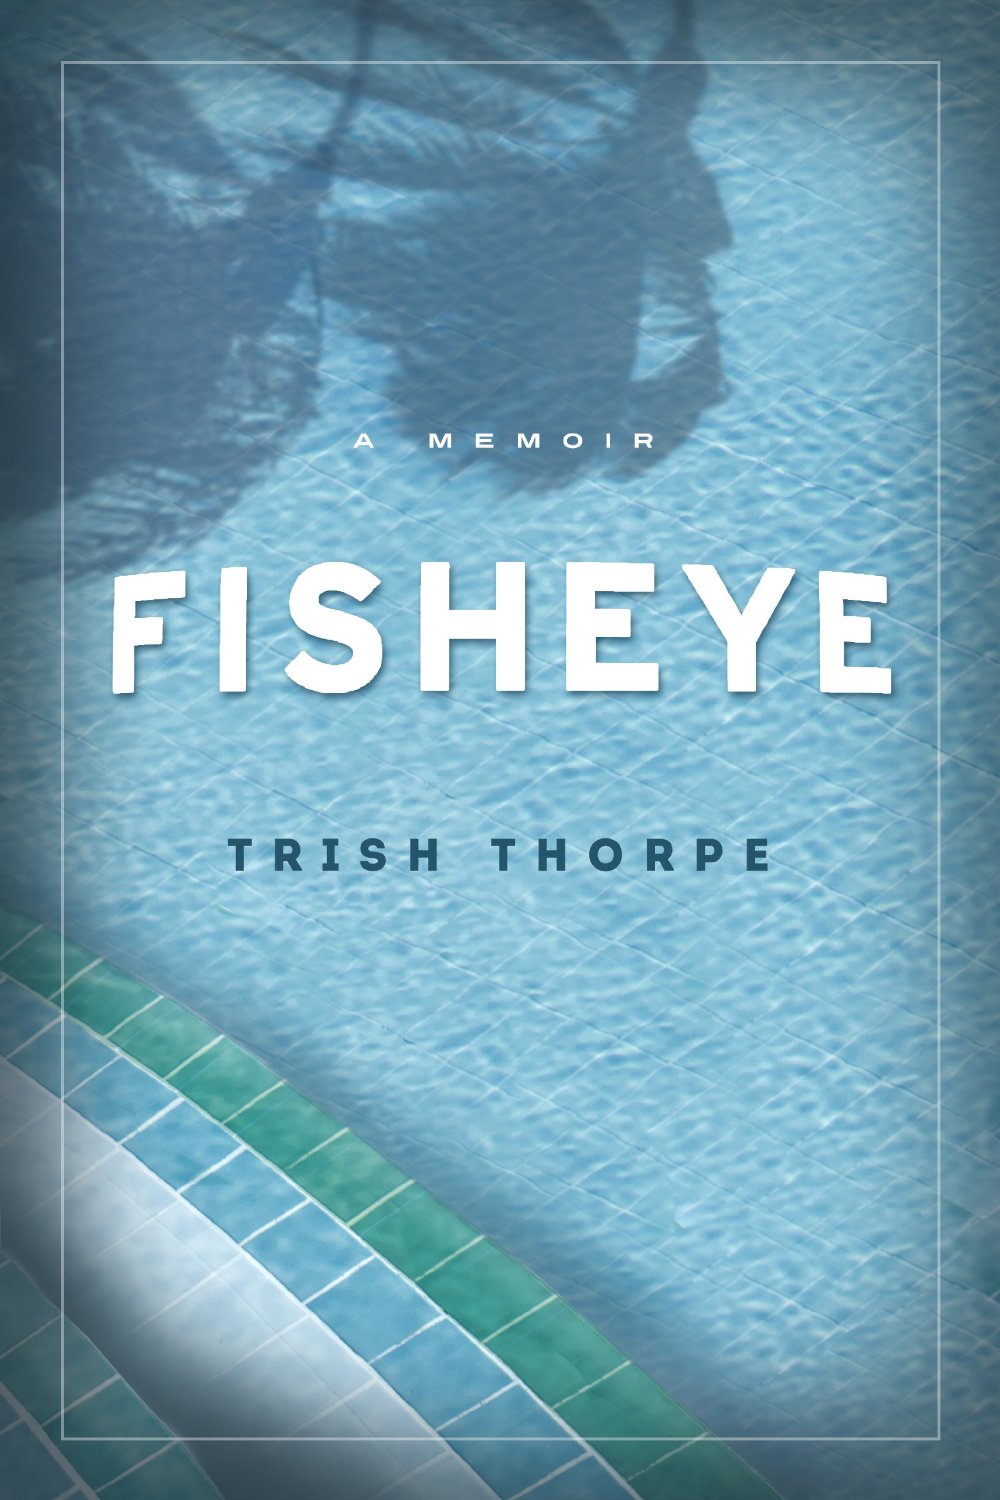 Fisheye: A Memoir by Trish Thorpe